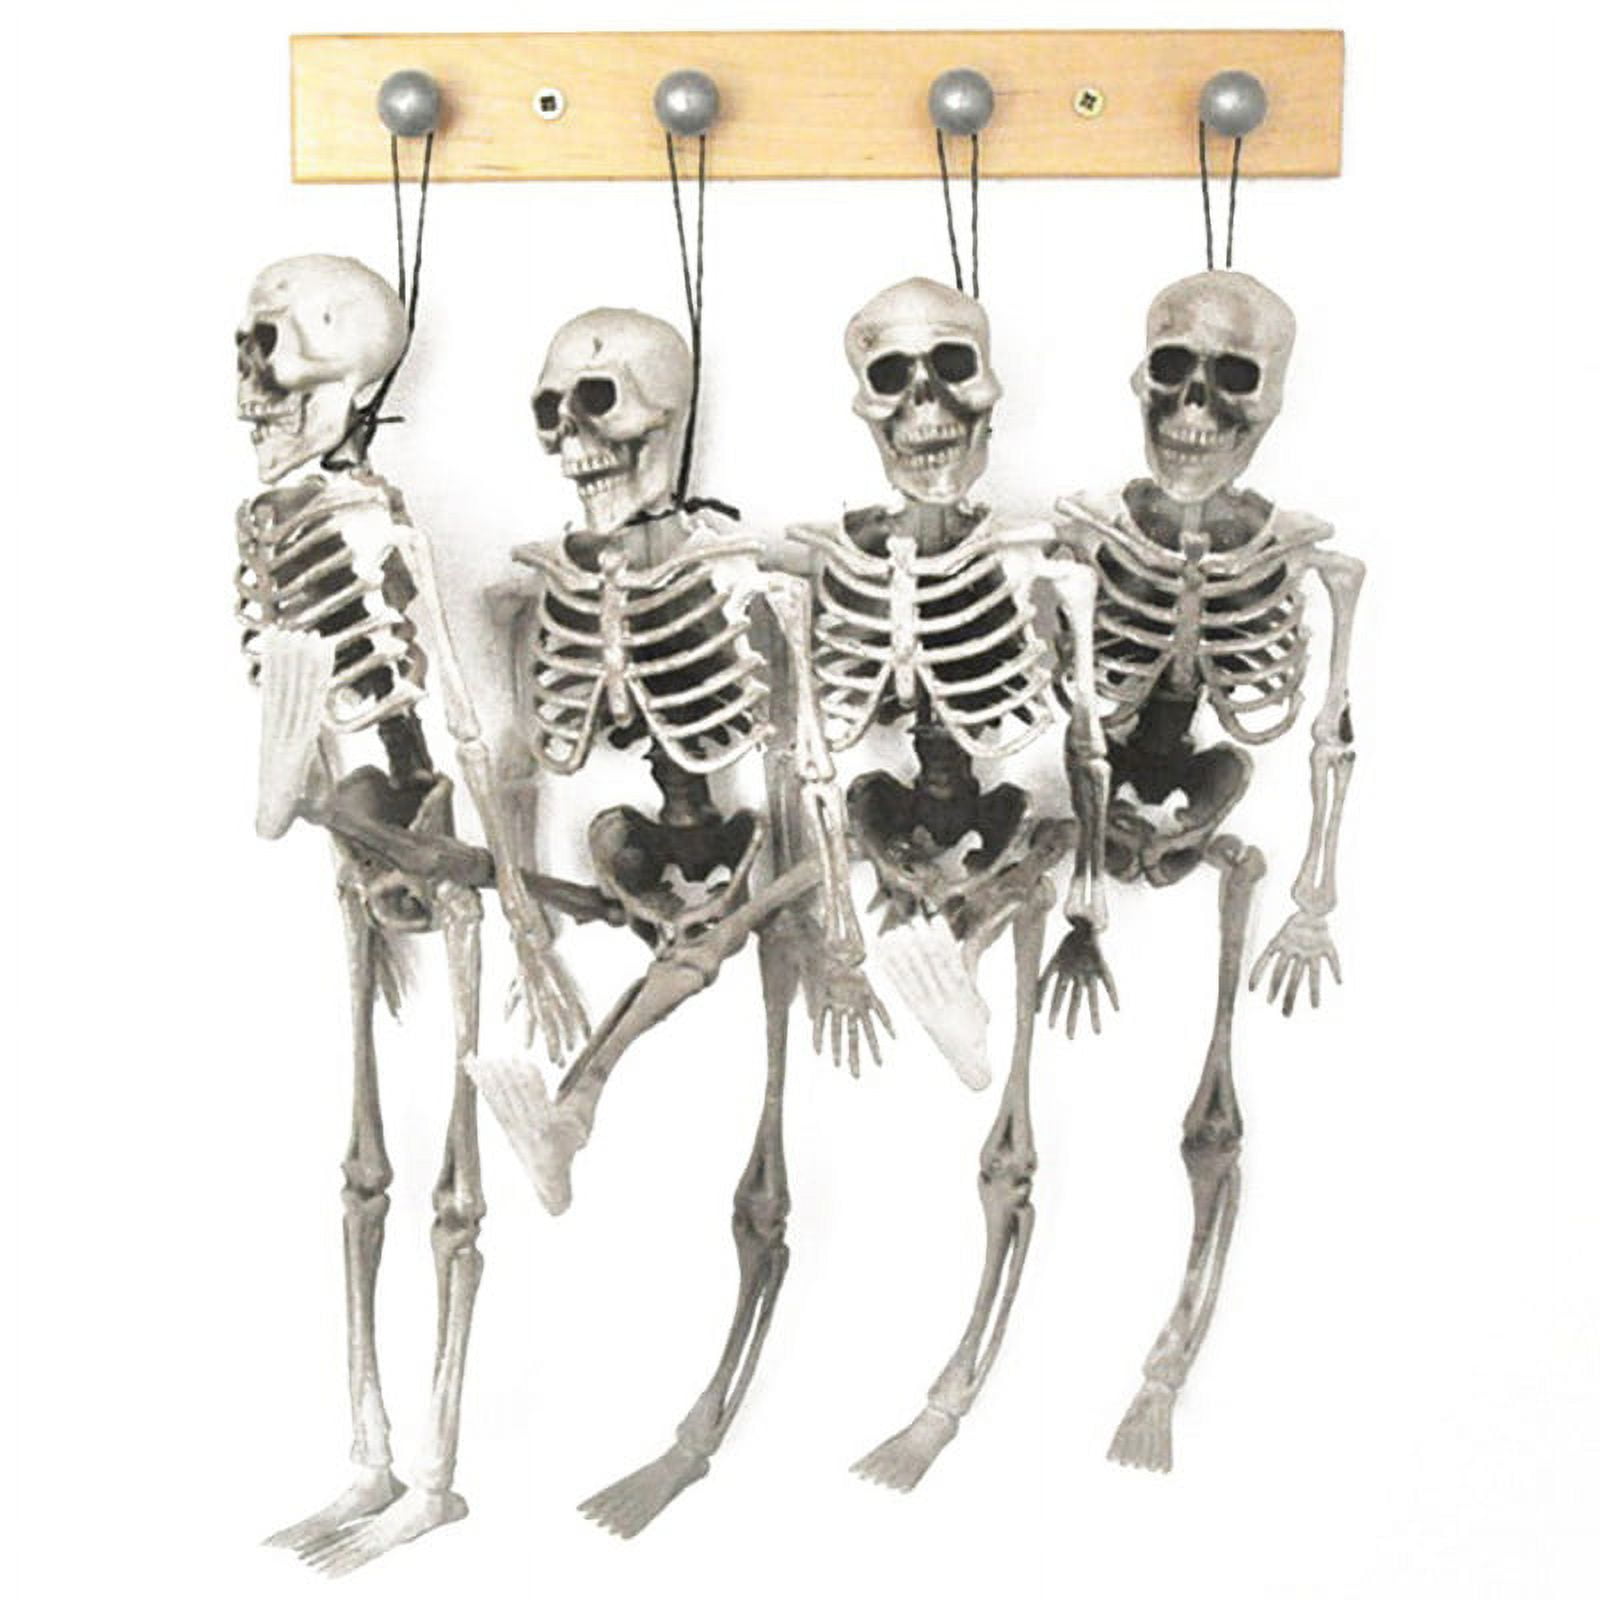 1Pc Halloween Simulated Figure Human Skull Skeleton Movable Mr. Bones  Skeleton Human Model Skull Full Body Mini Toy Decoration